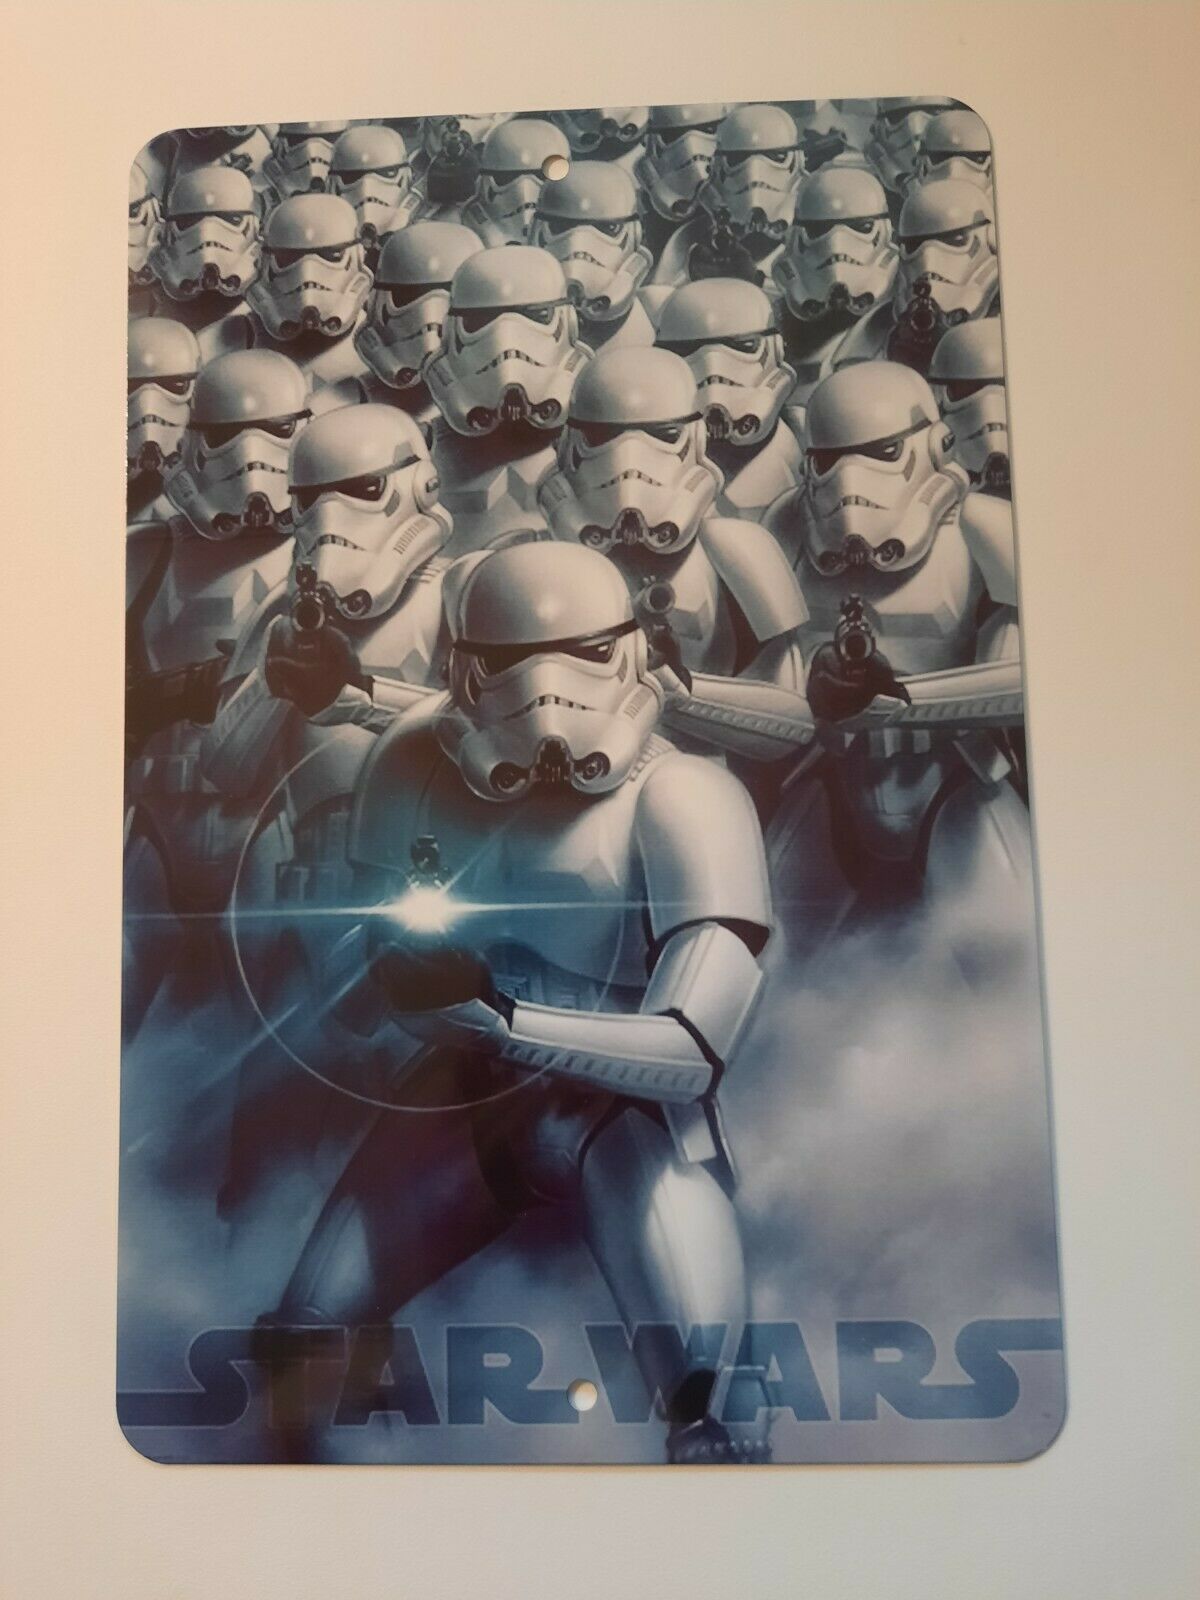 Star Wars Storm Troopers Artwork 8x12 Metal Wall Sign